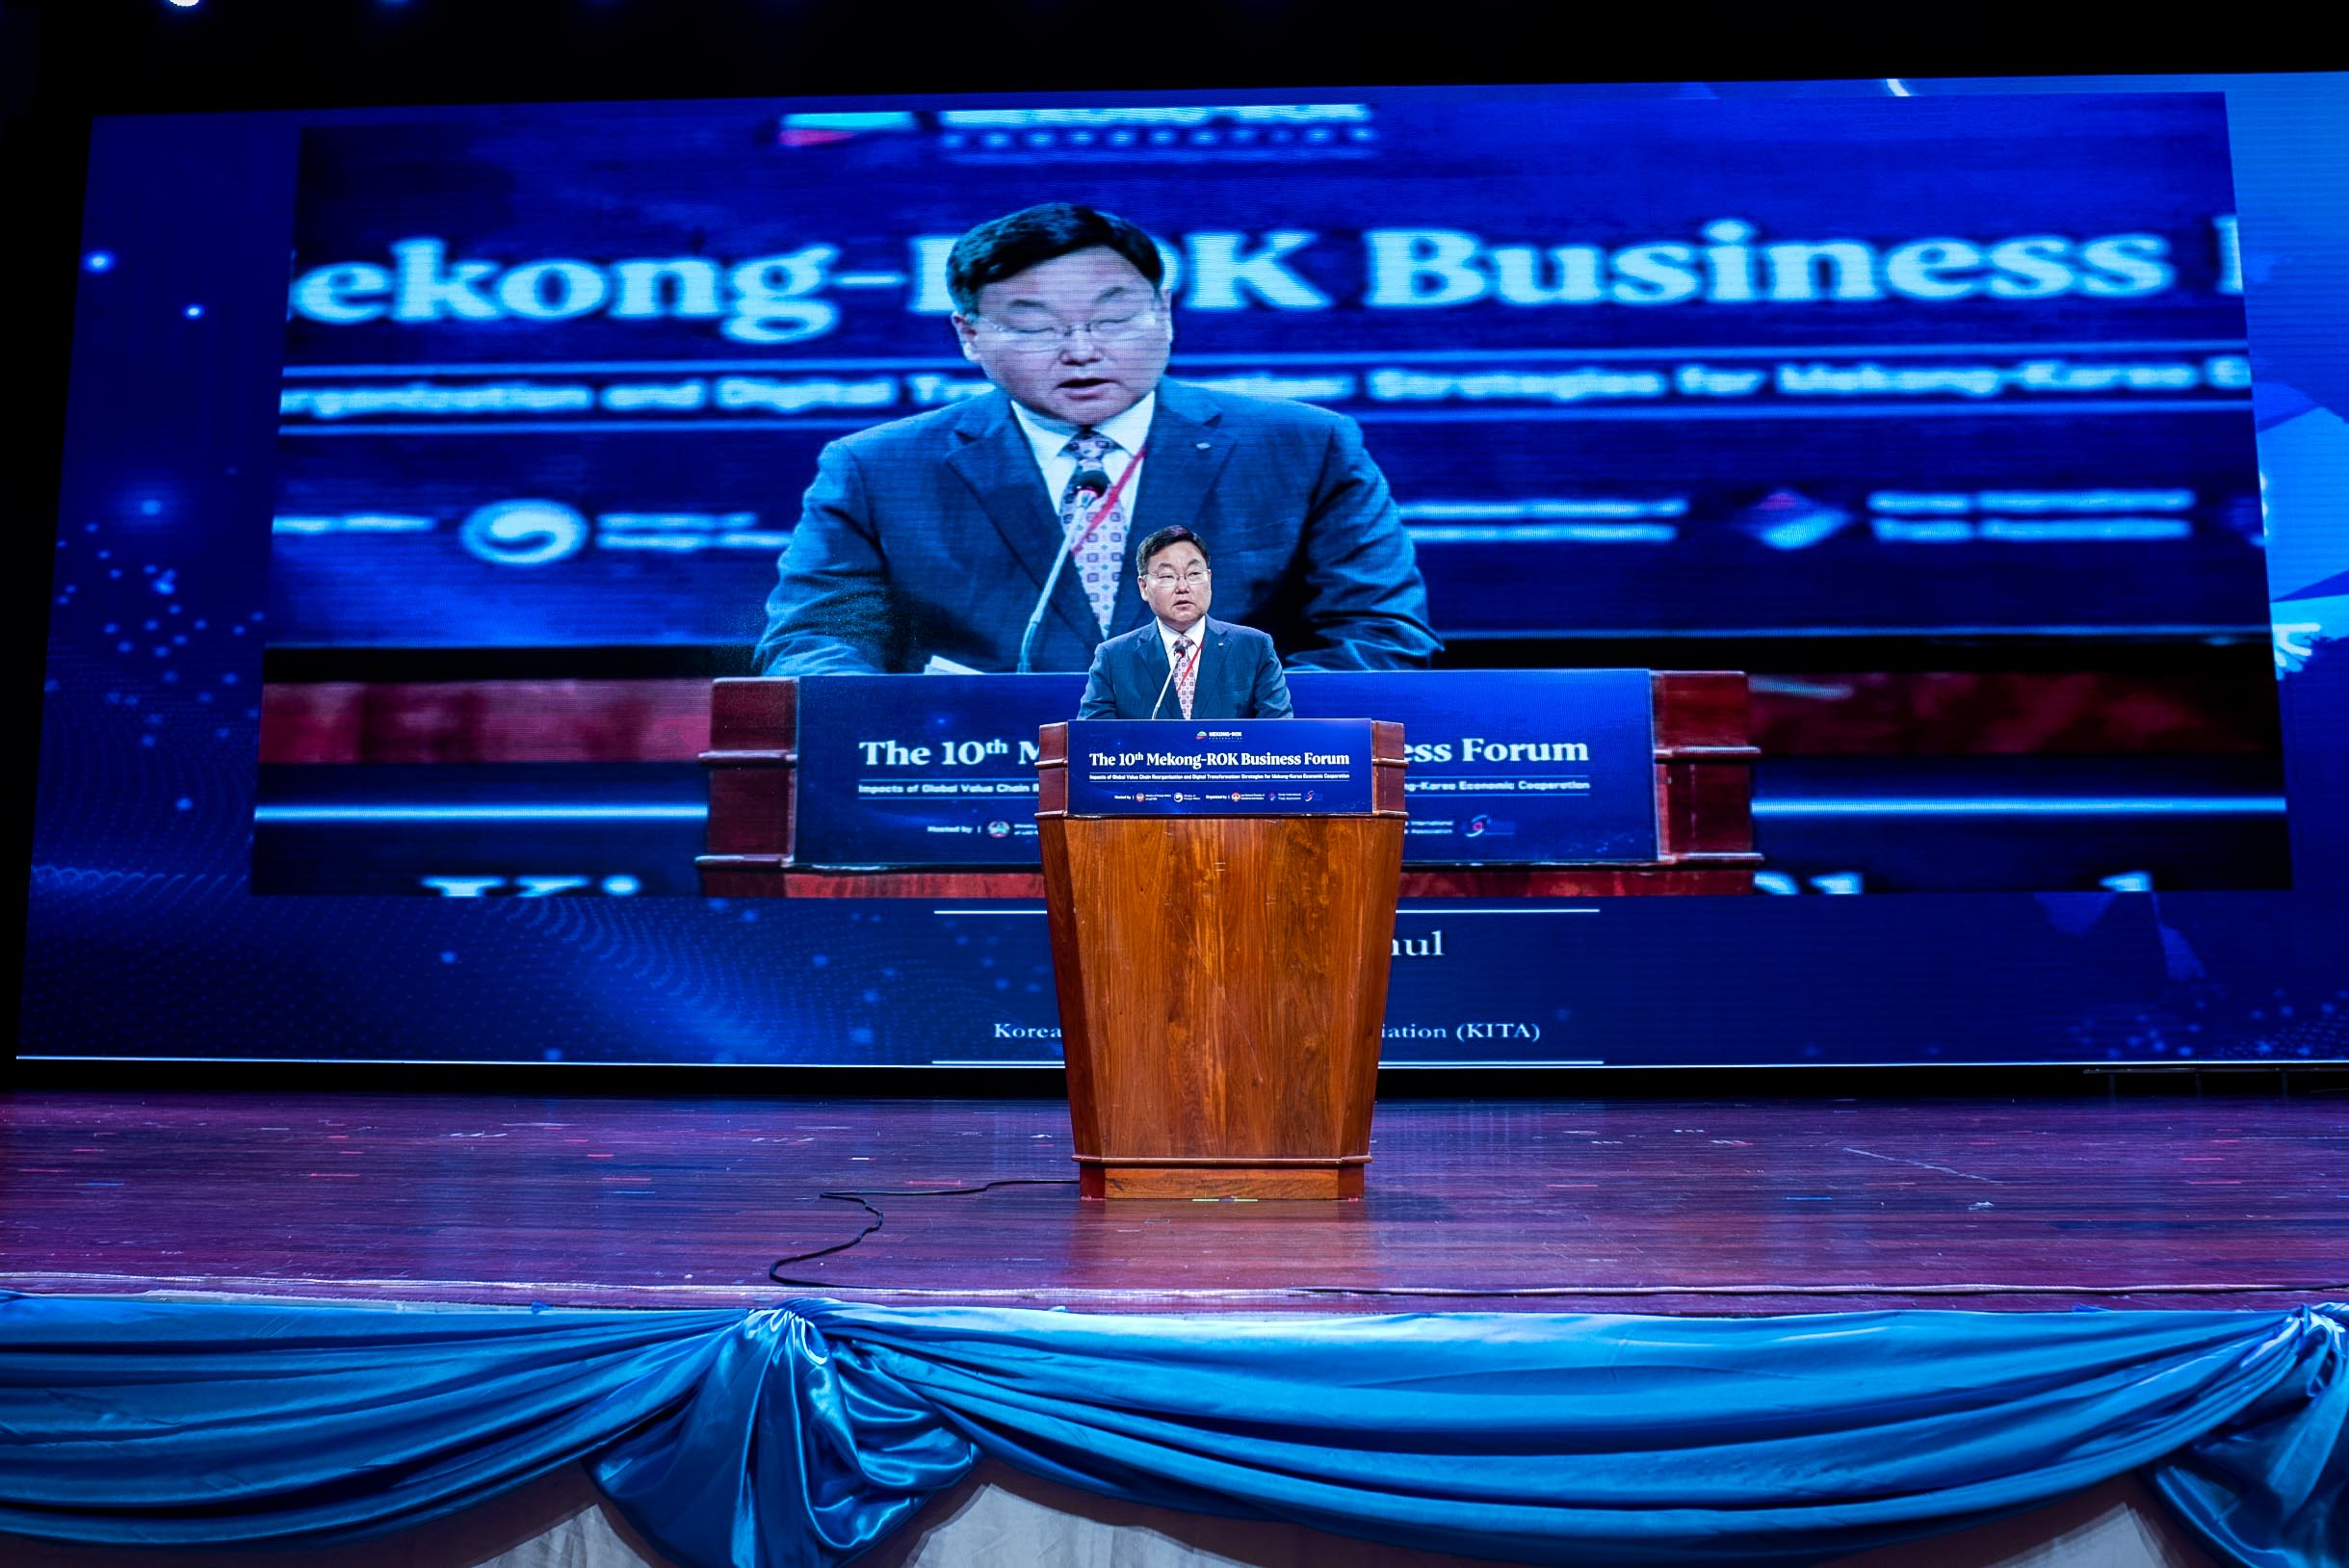 The 10th Mekong - Republic of Korea Business Forum & B2B Business Meeting